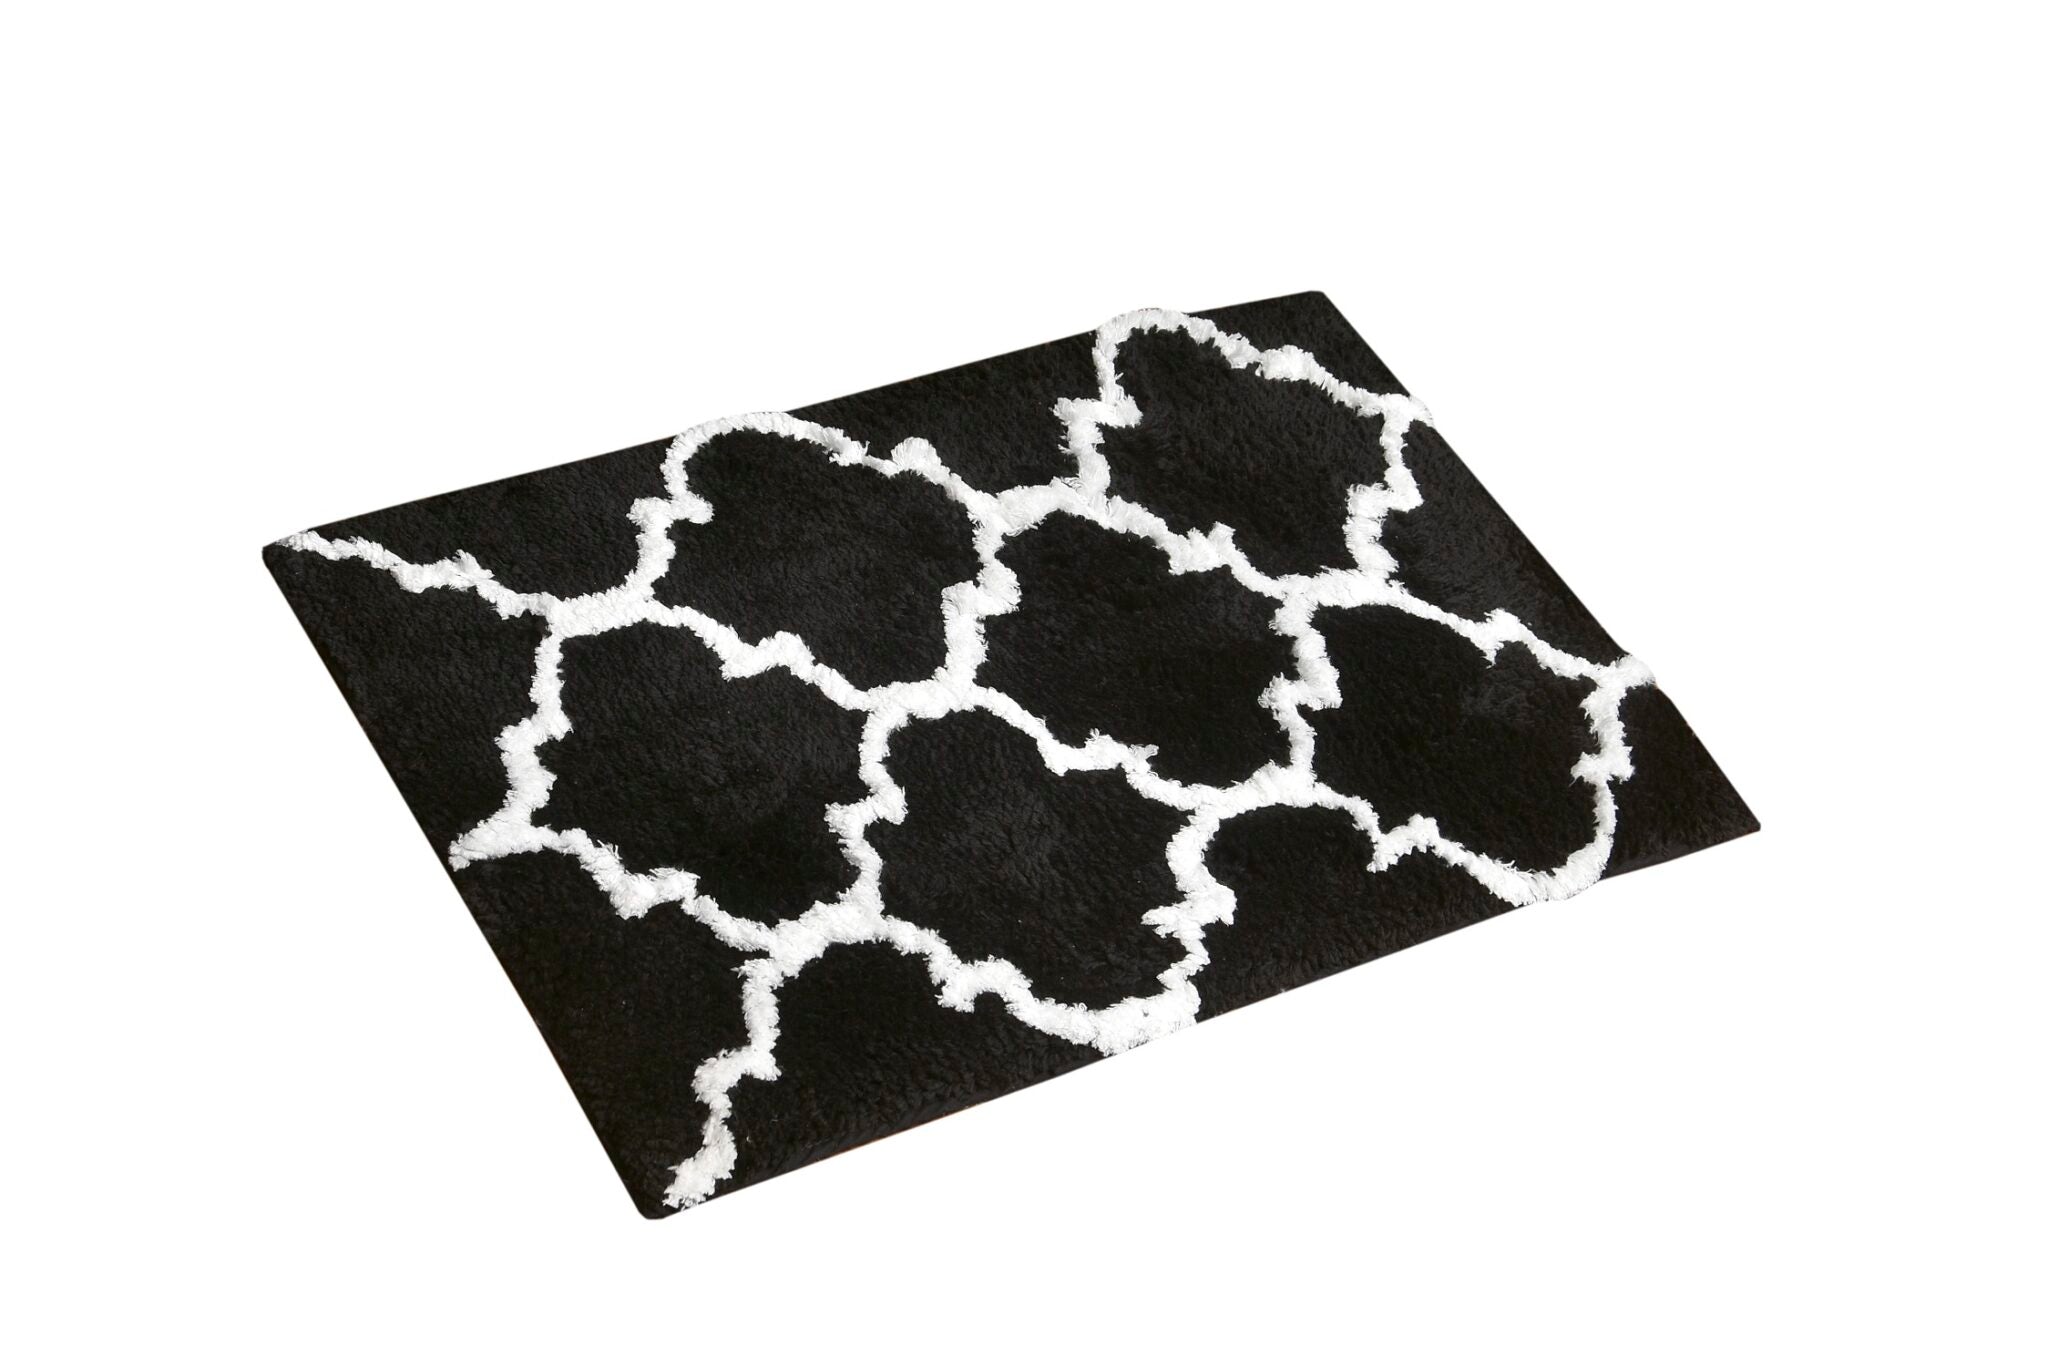 Glorious Moroccan Super Soft Anti Slip Bathmat, Black